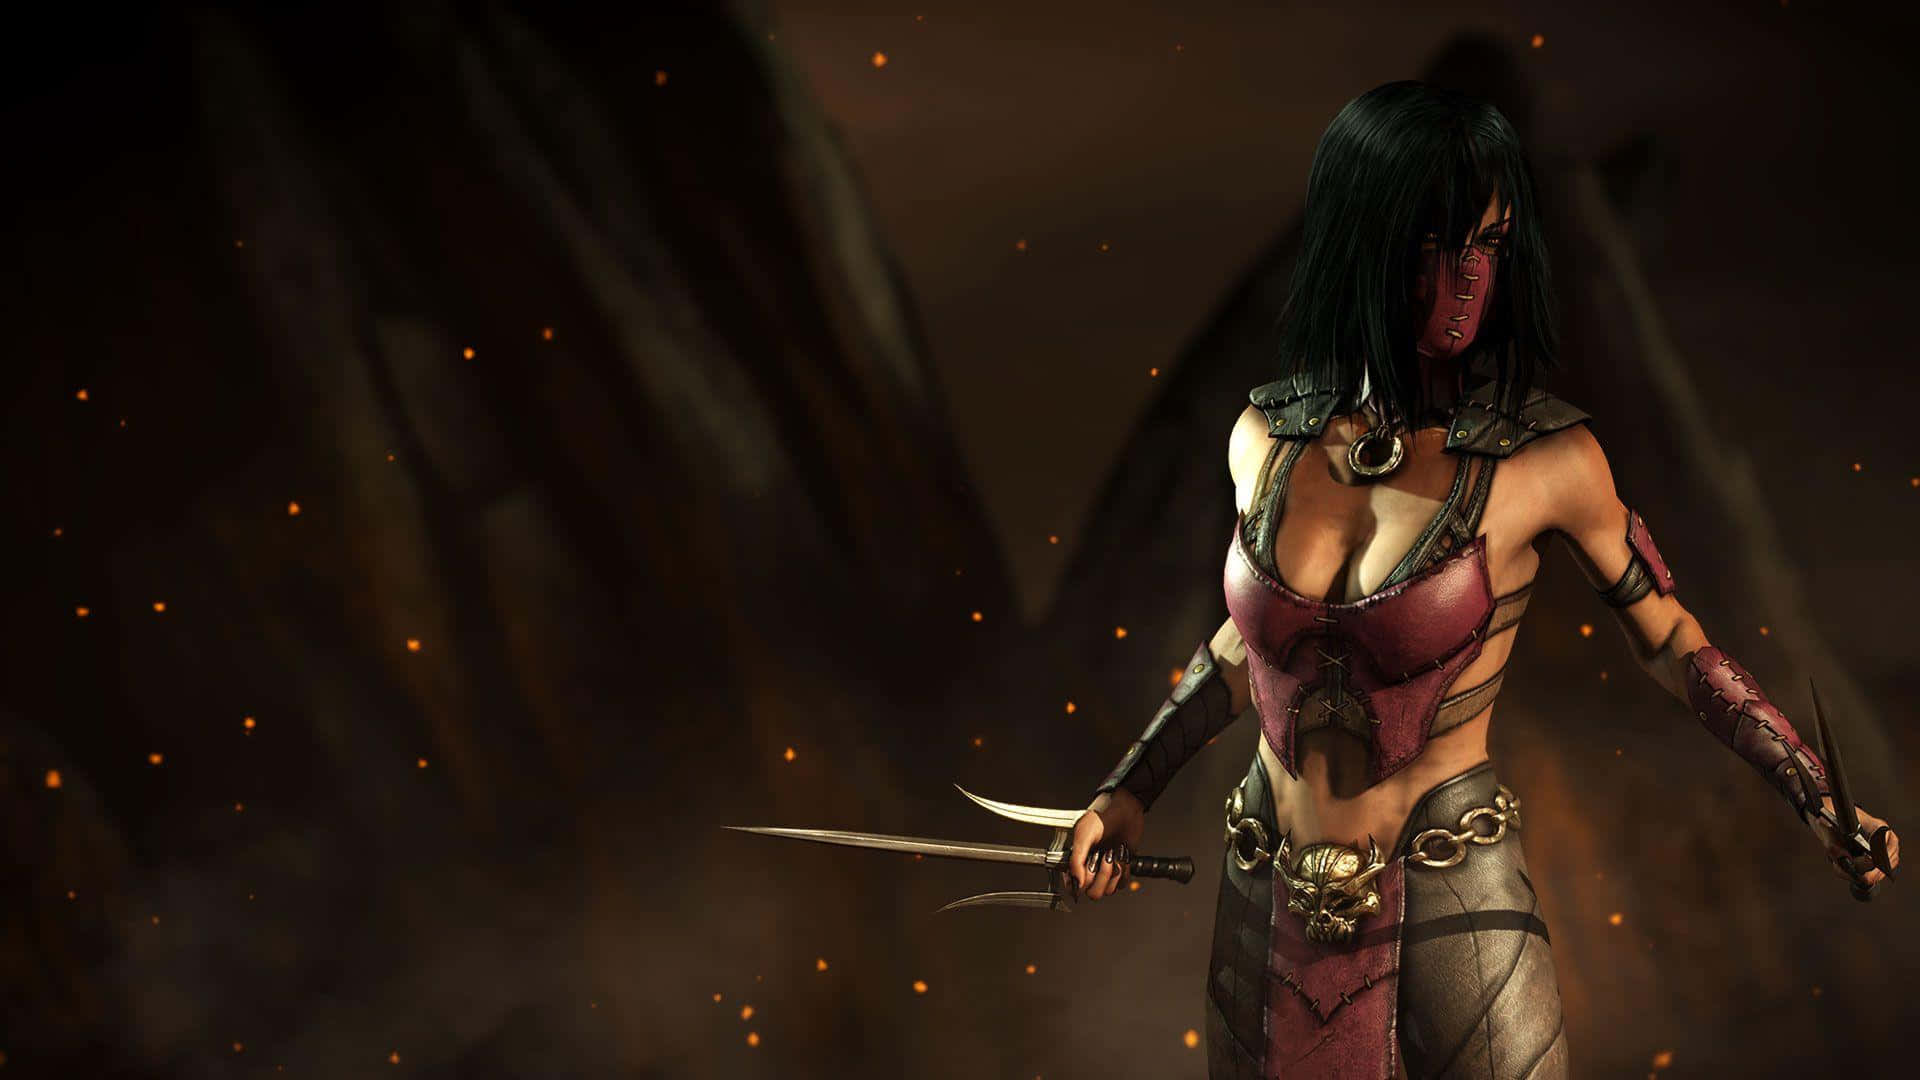 Mortal Kombat's fierce warrior Mileena in action Wallpaper